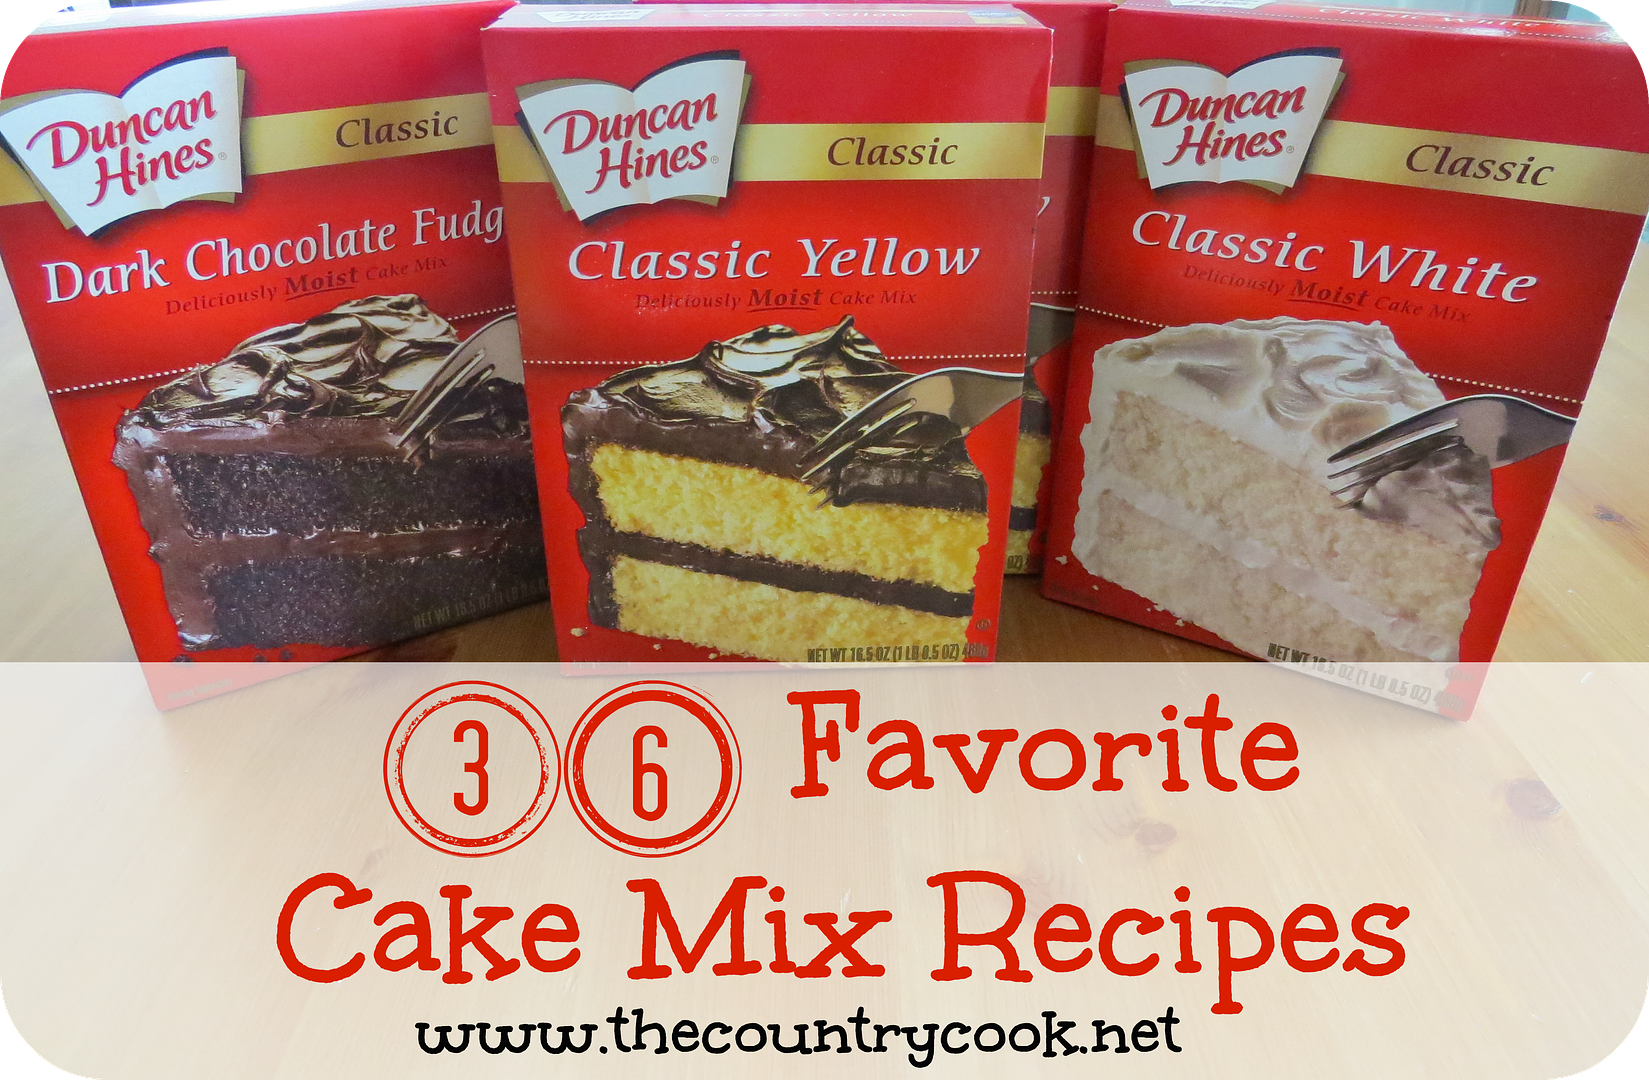 How do you make lemon cookies using cake mix?